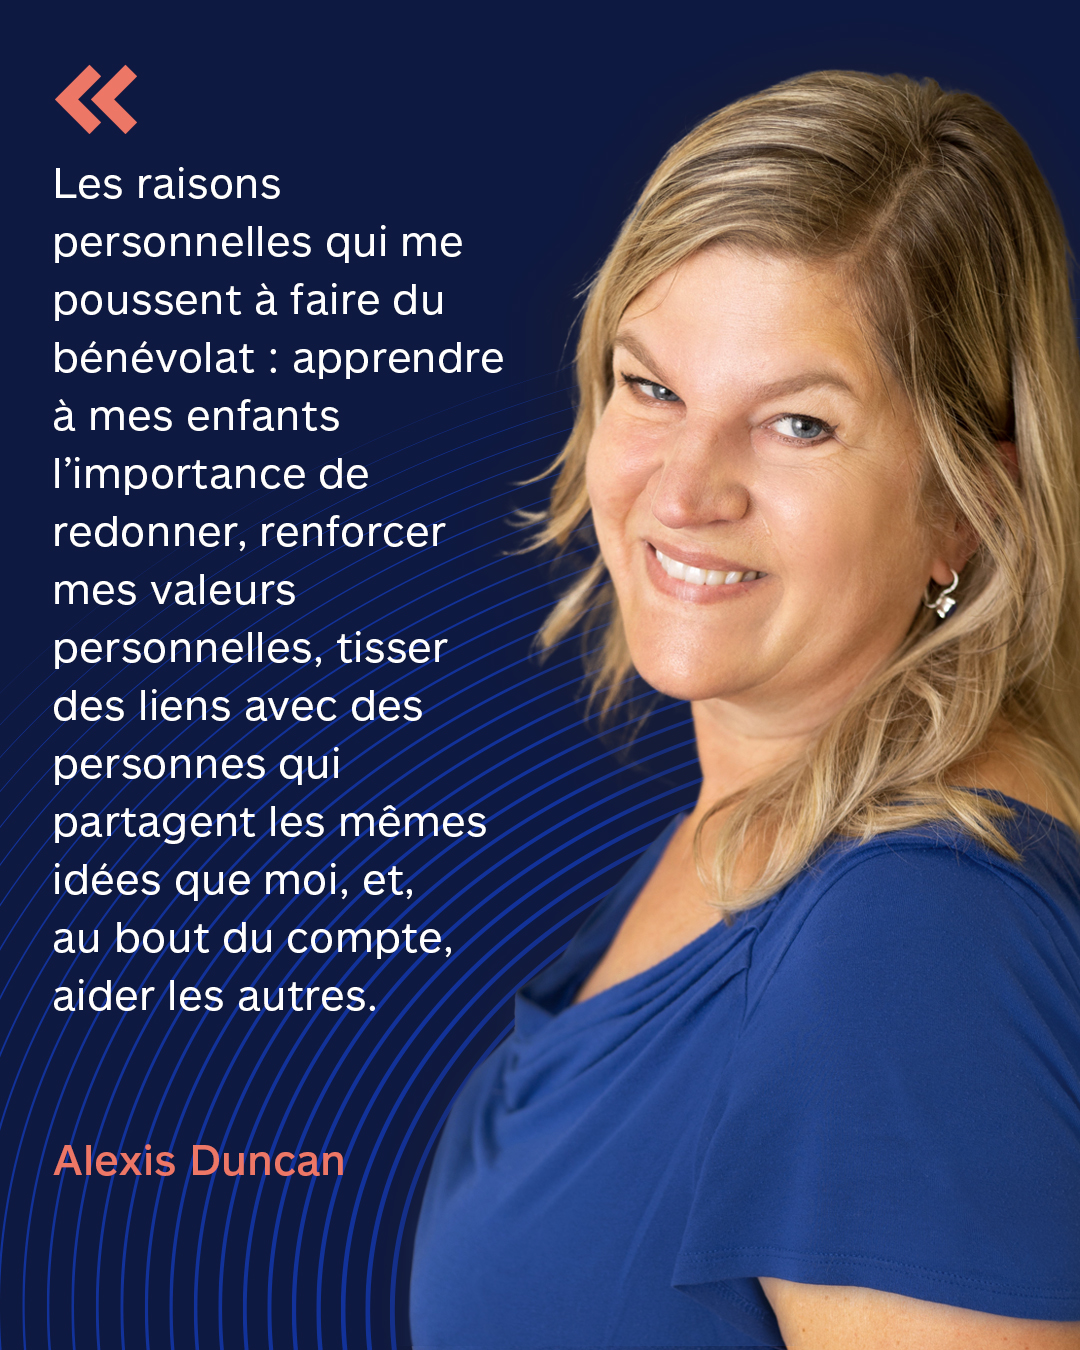 Alexis Duncan